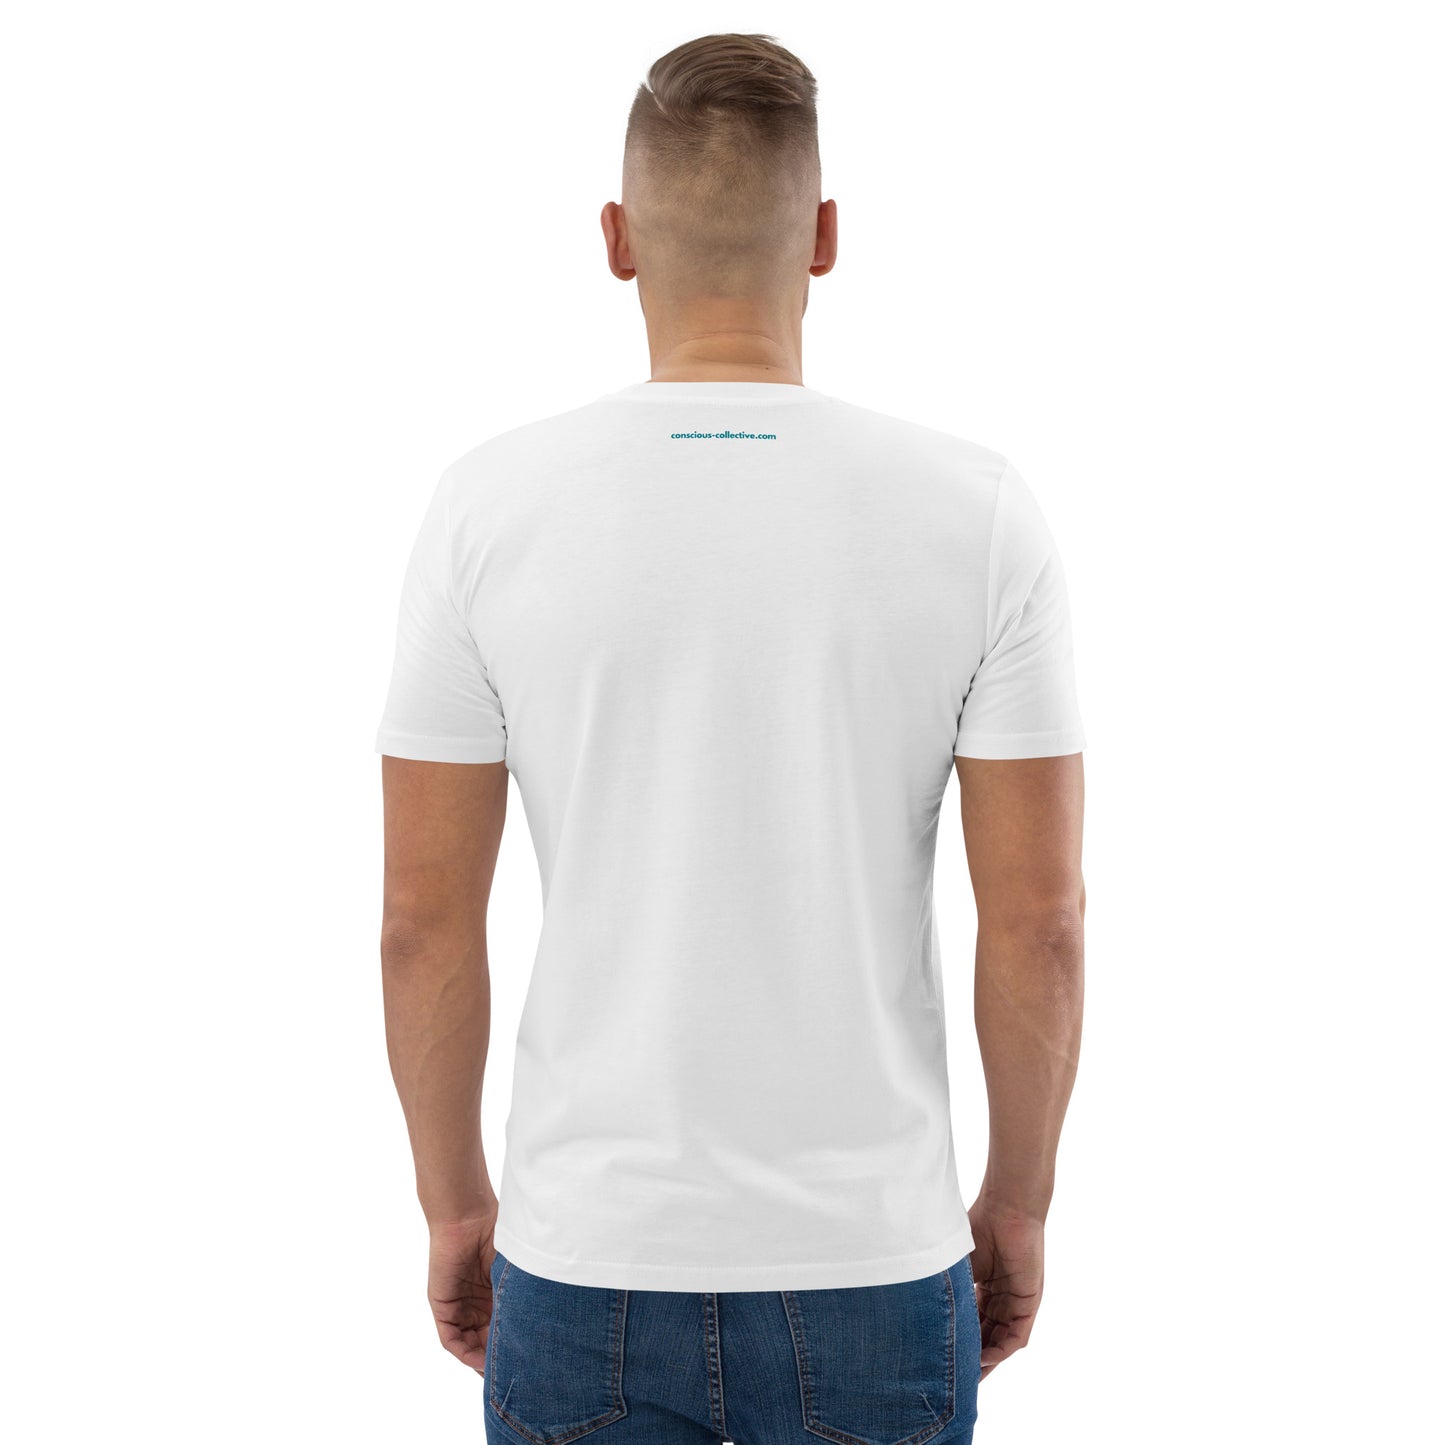 Choose Love - Unisex Organic Cotton T-Shirt #2